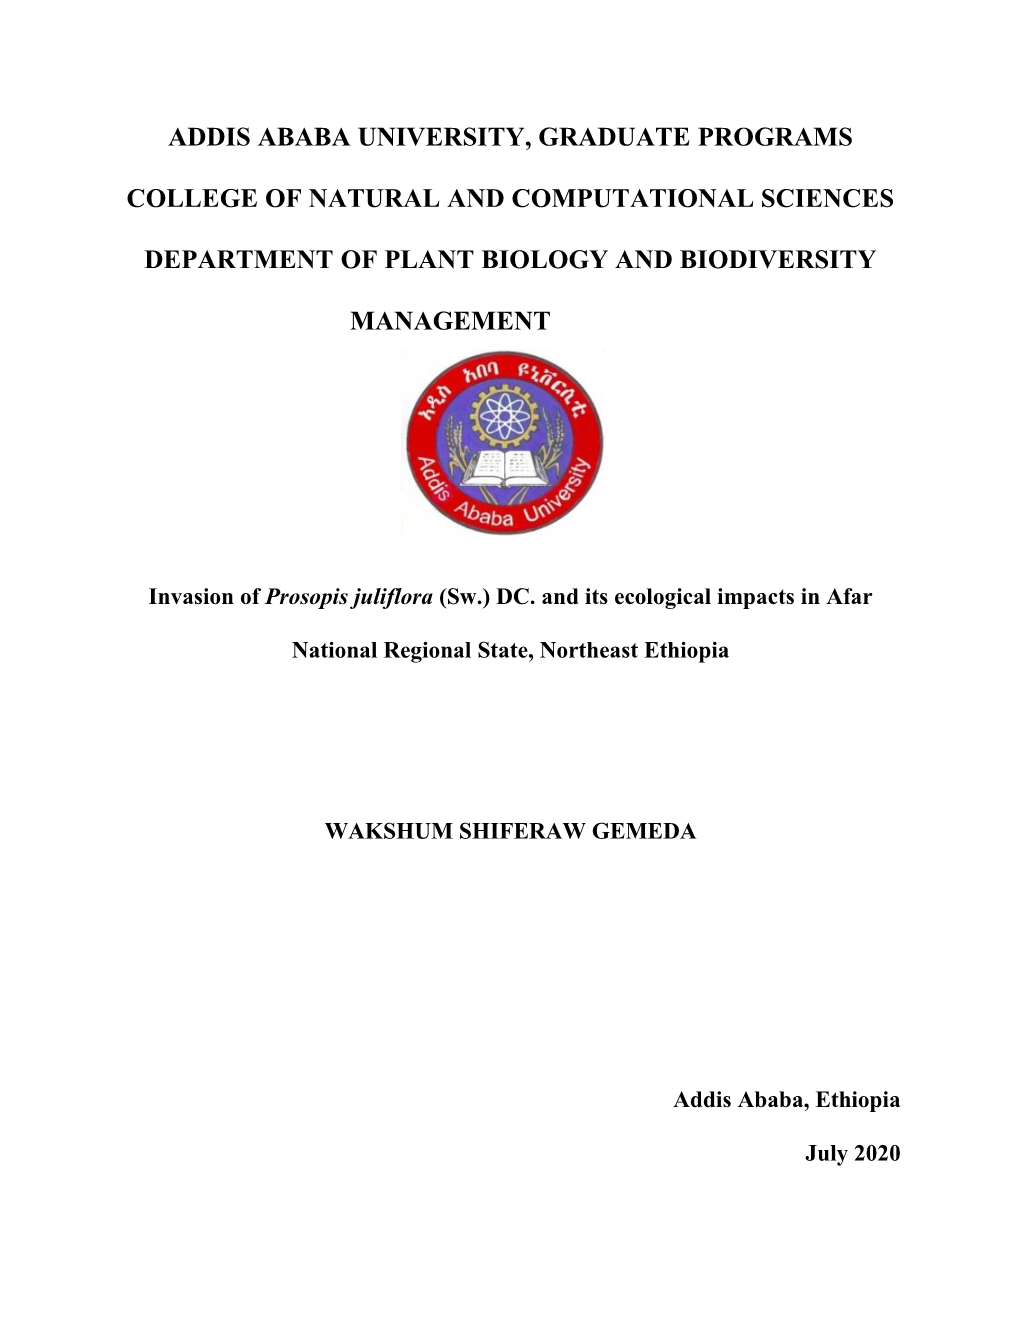 Addis Ababa University, Graduate Programs